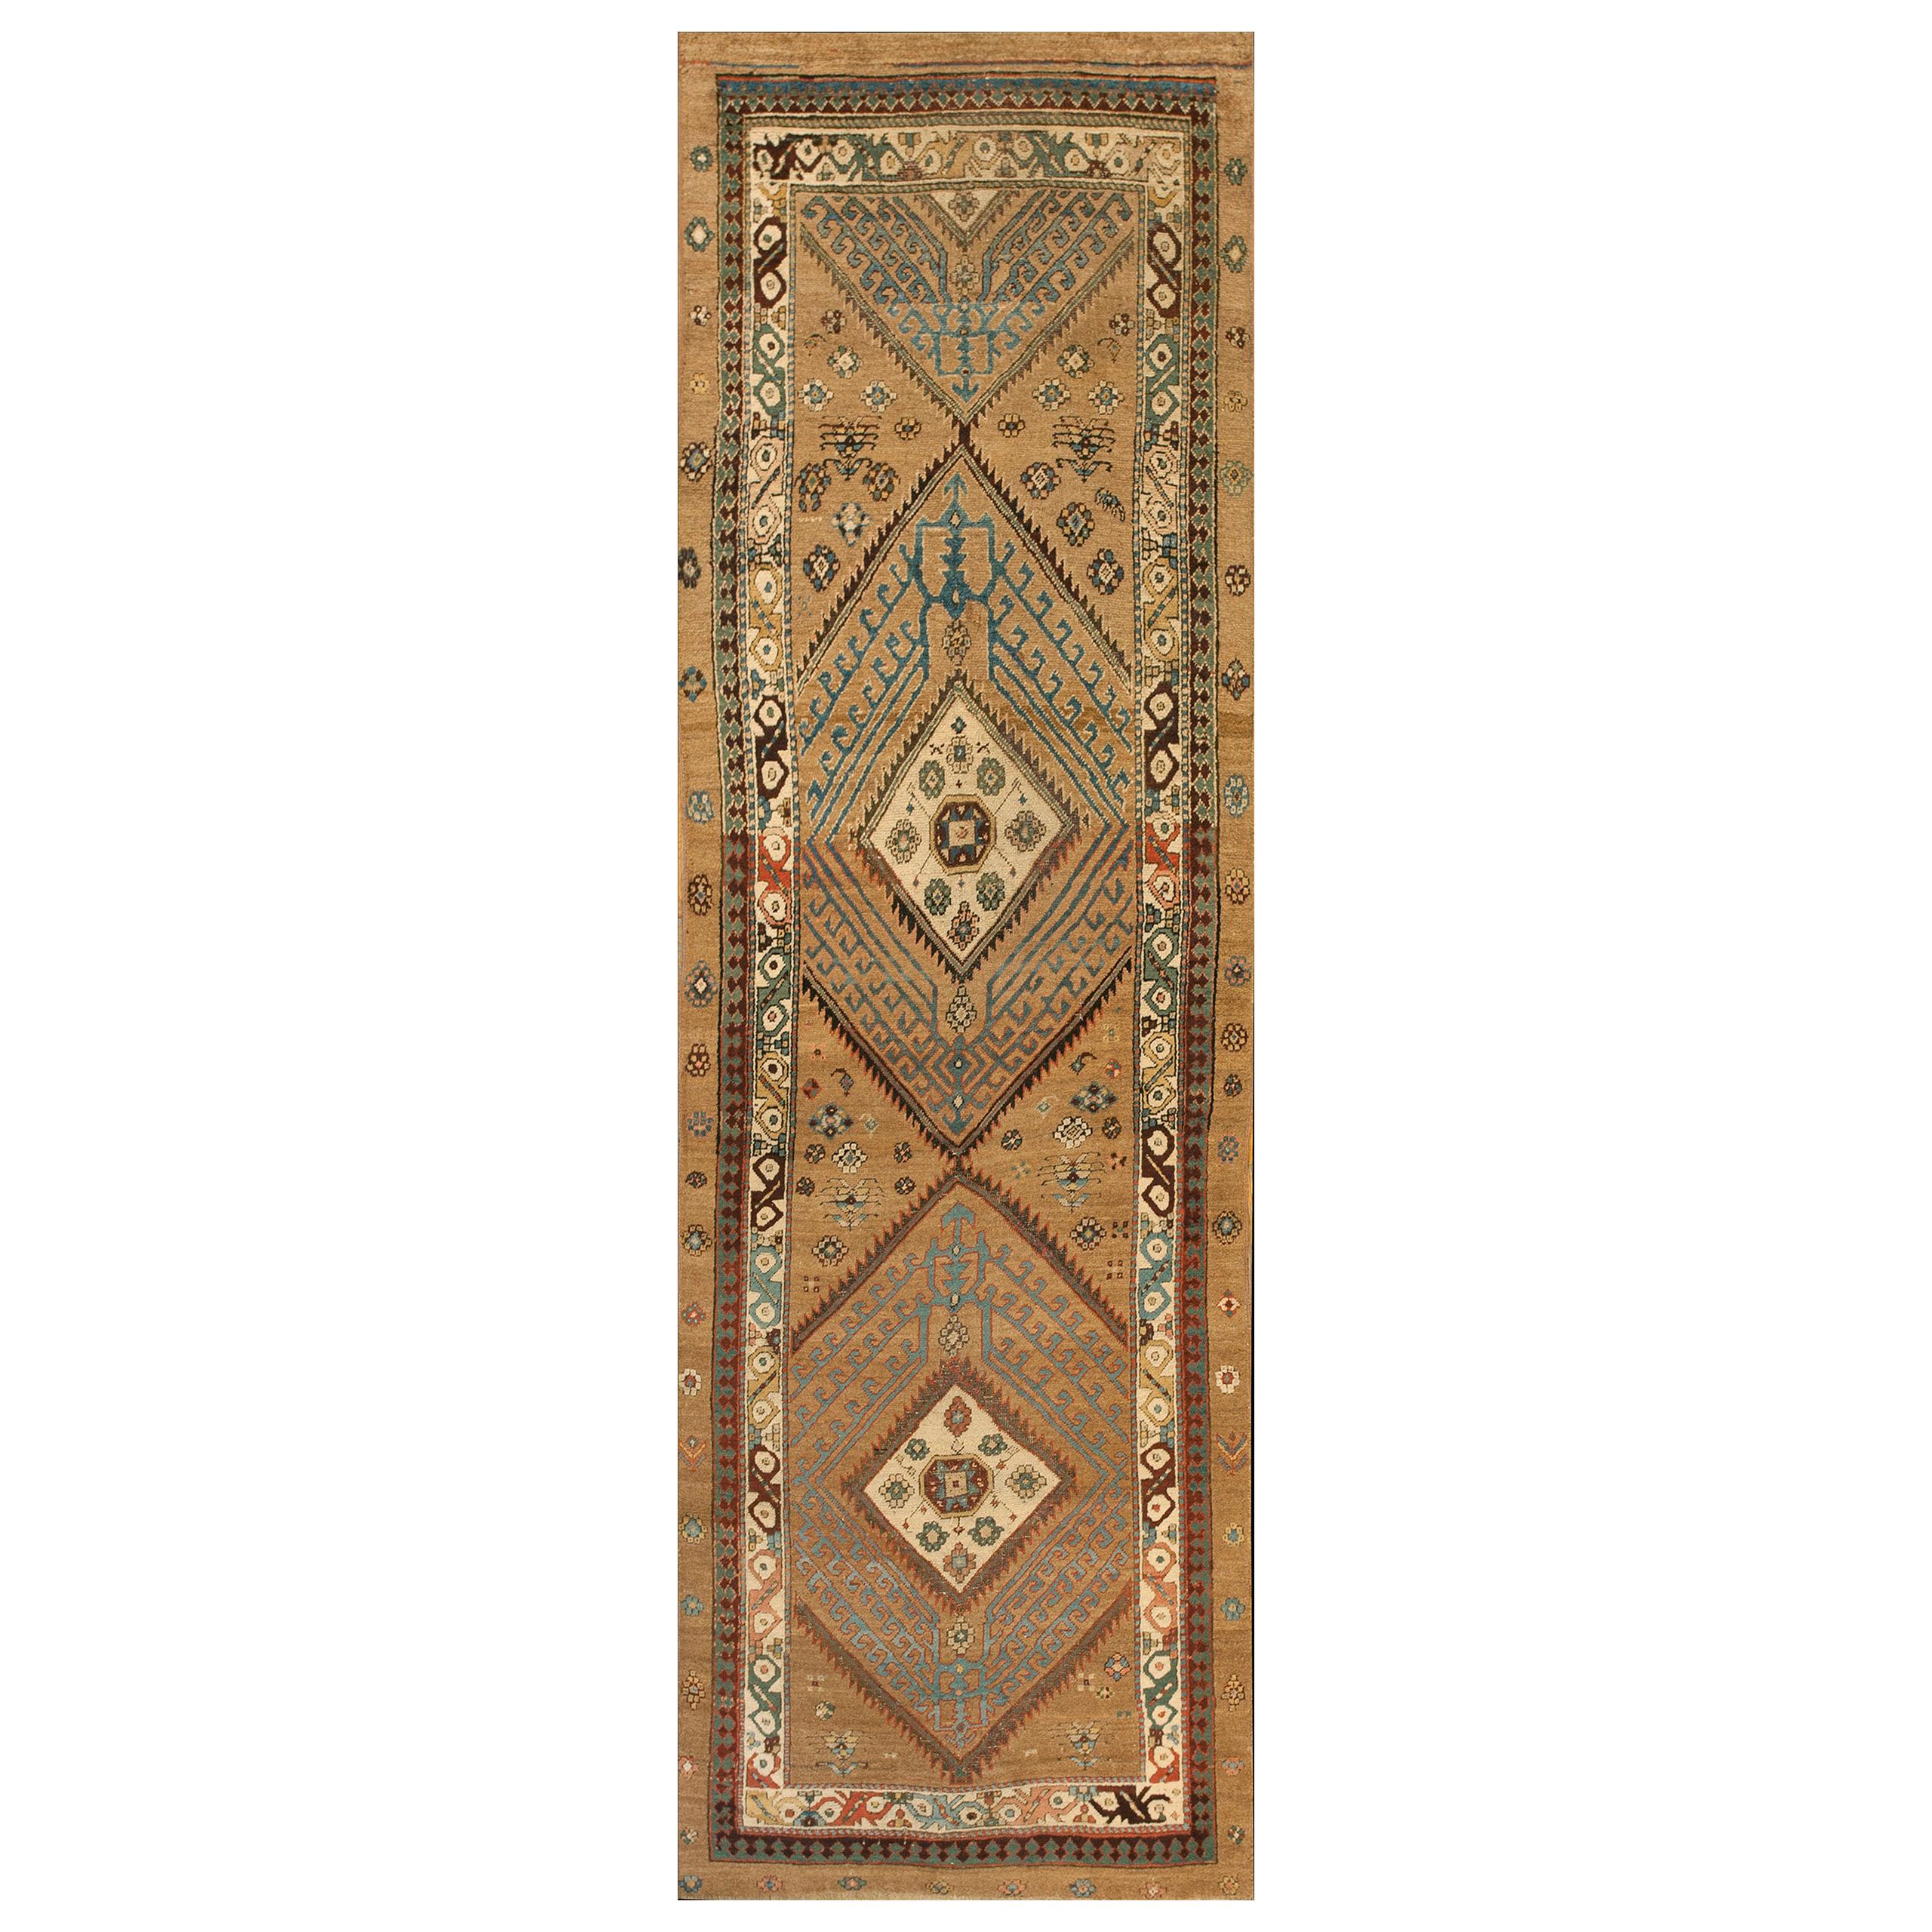 Late 19th Century N.W. Persian Serab Runner Carpet ( 3'3" x 10'4" - 99 x 315 )